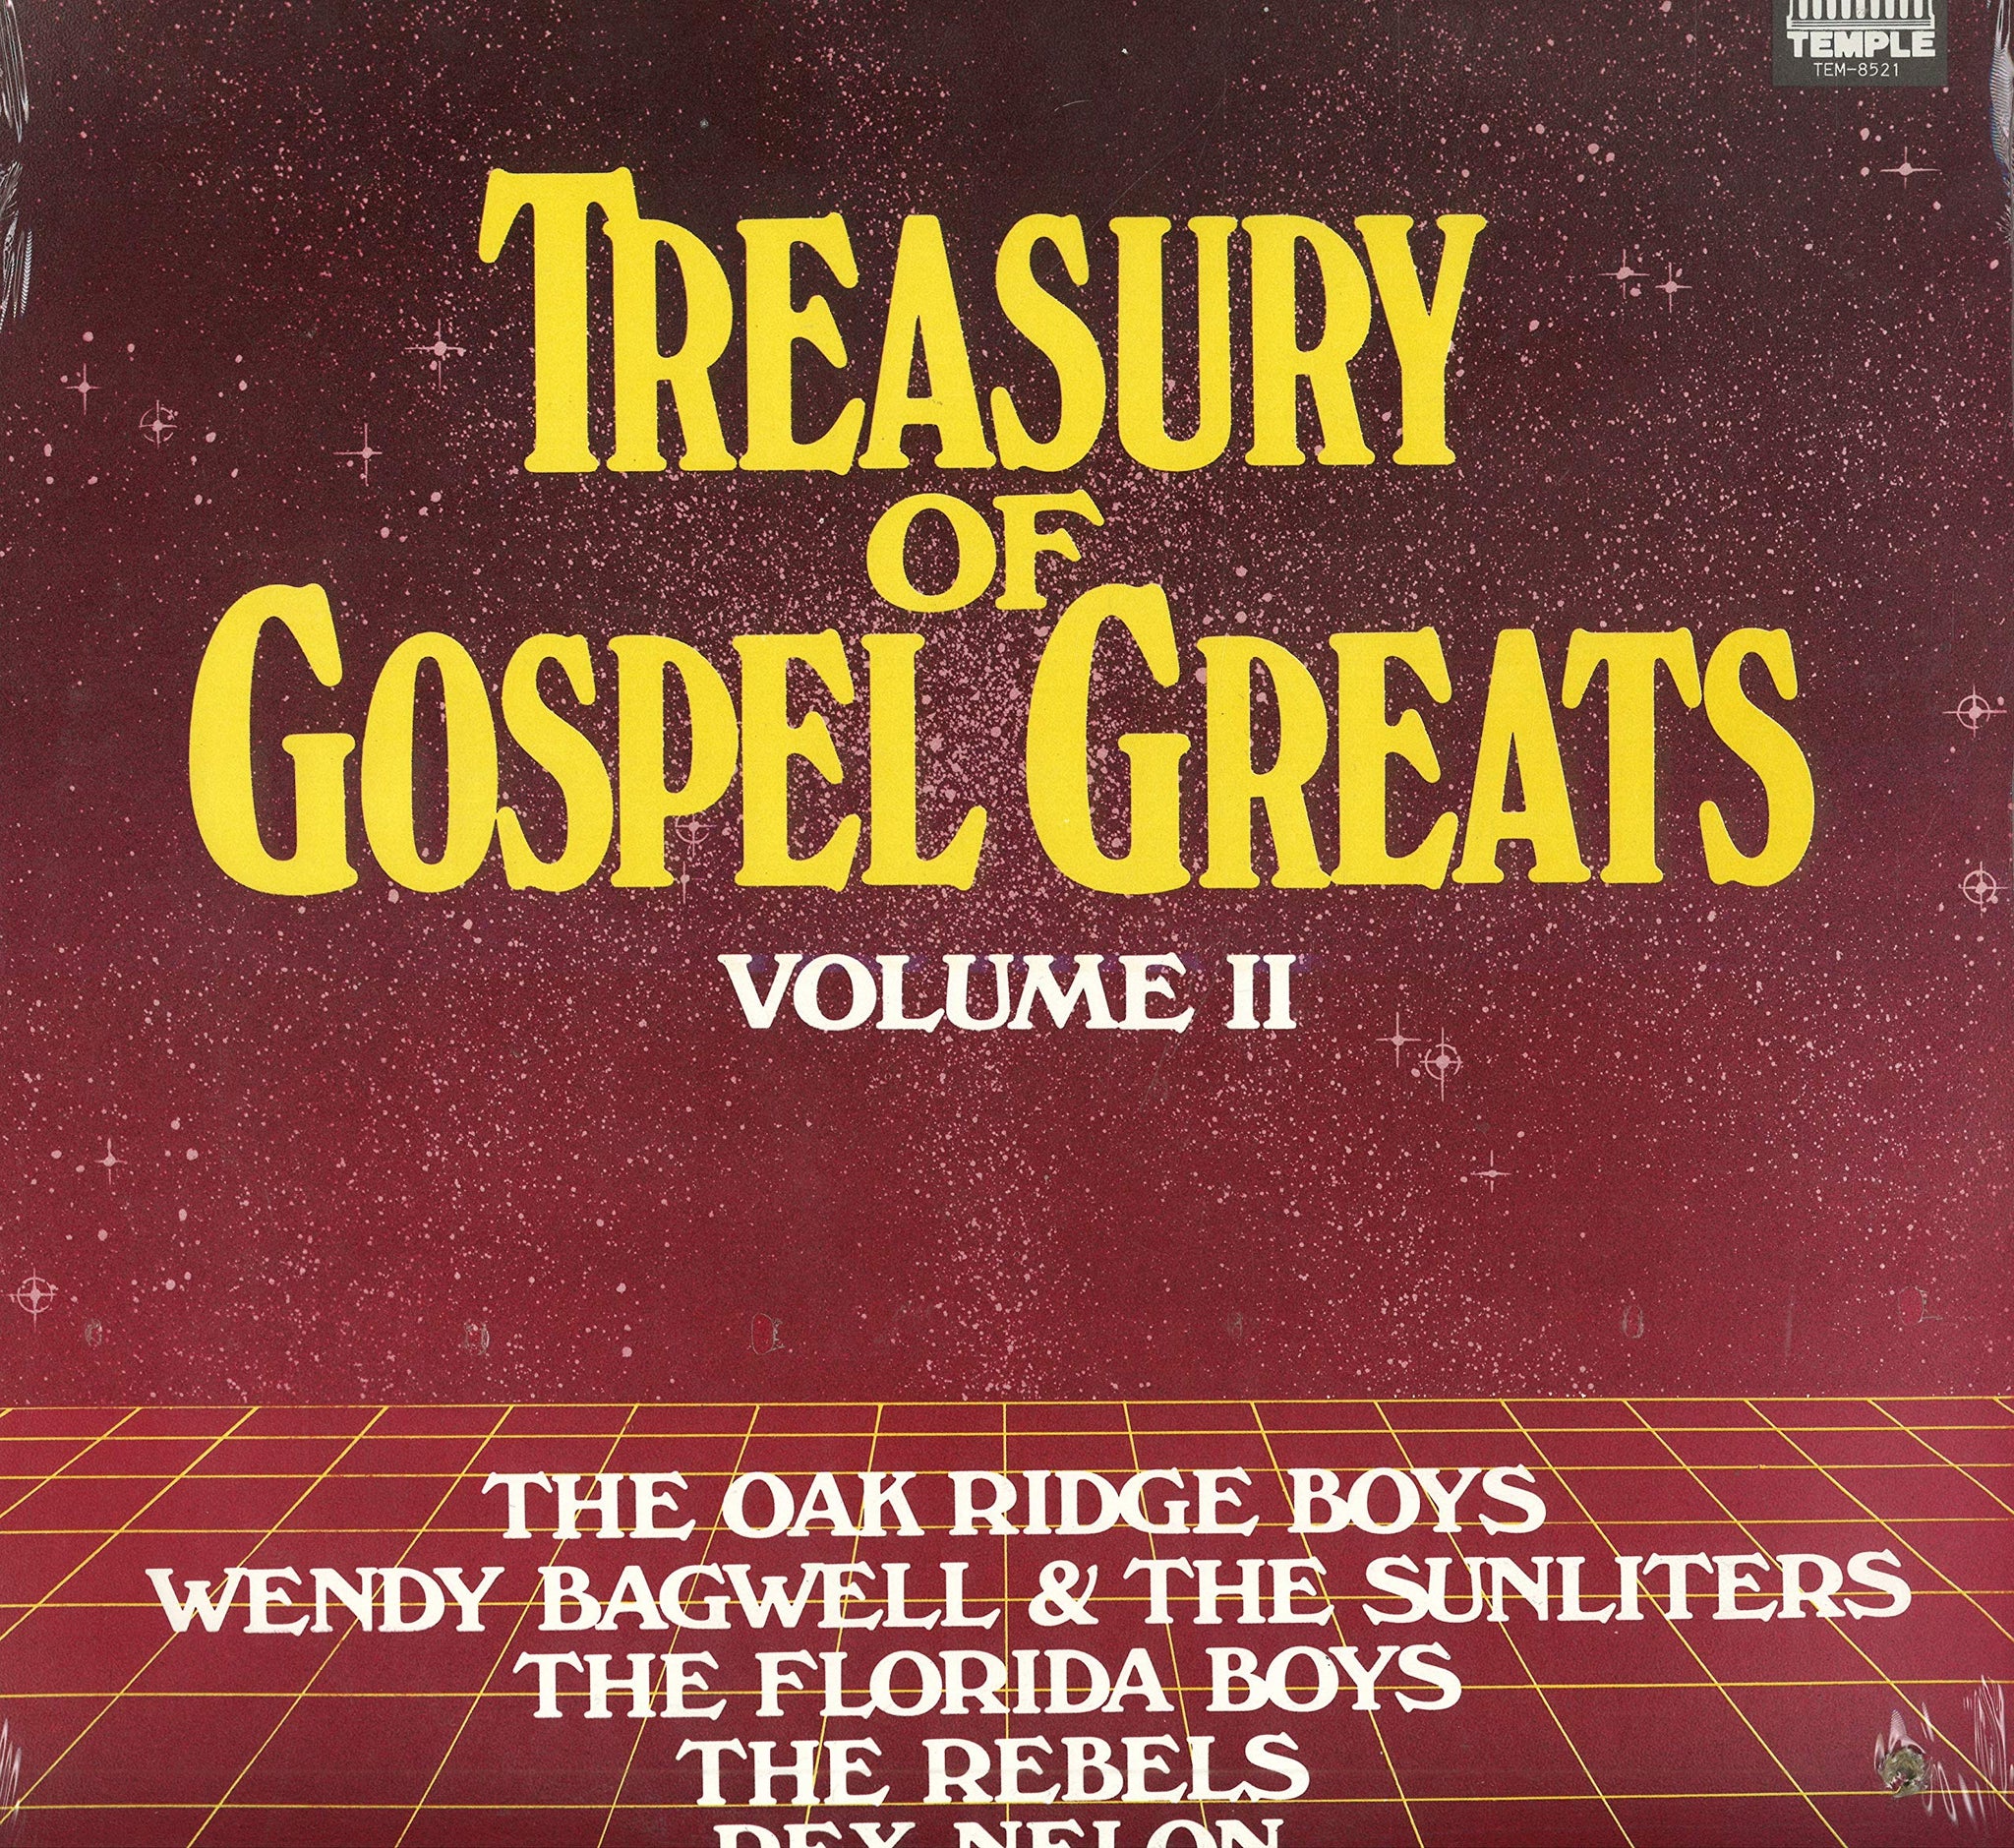 Various Artists Treasury of Gospel Greats Volume II